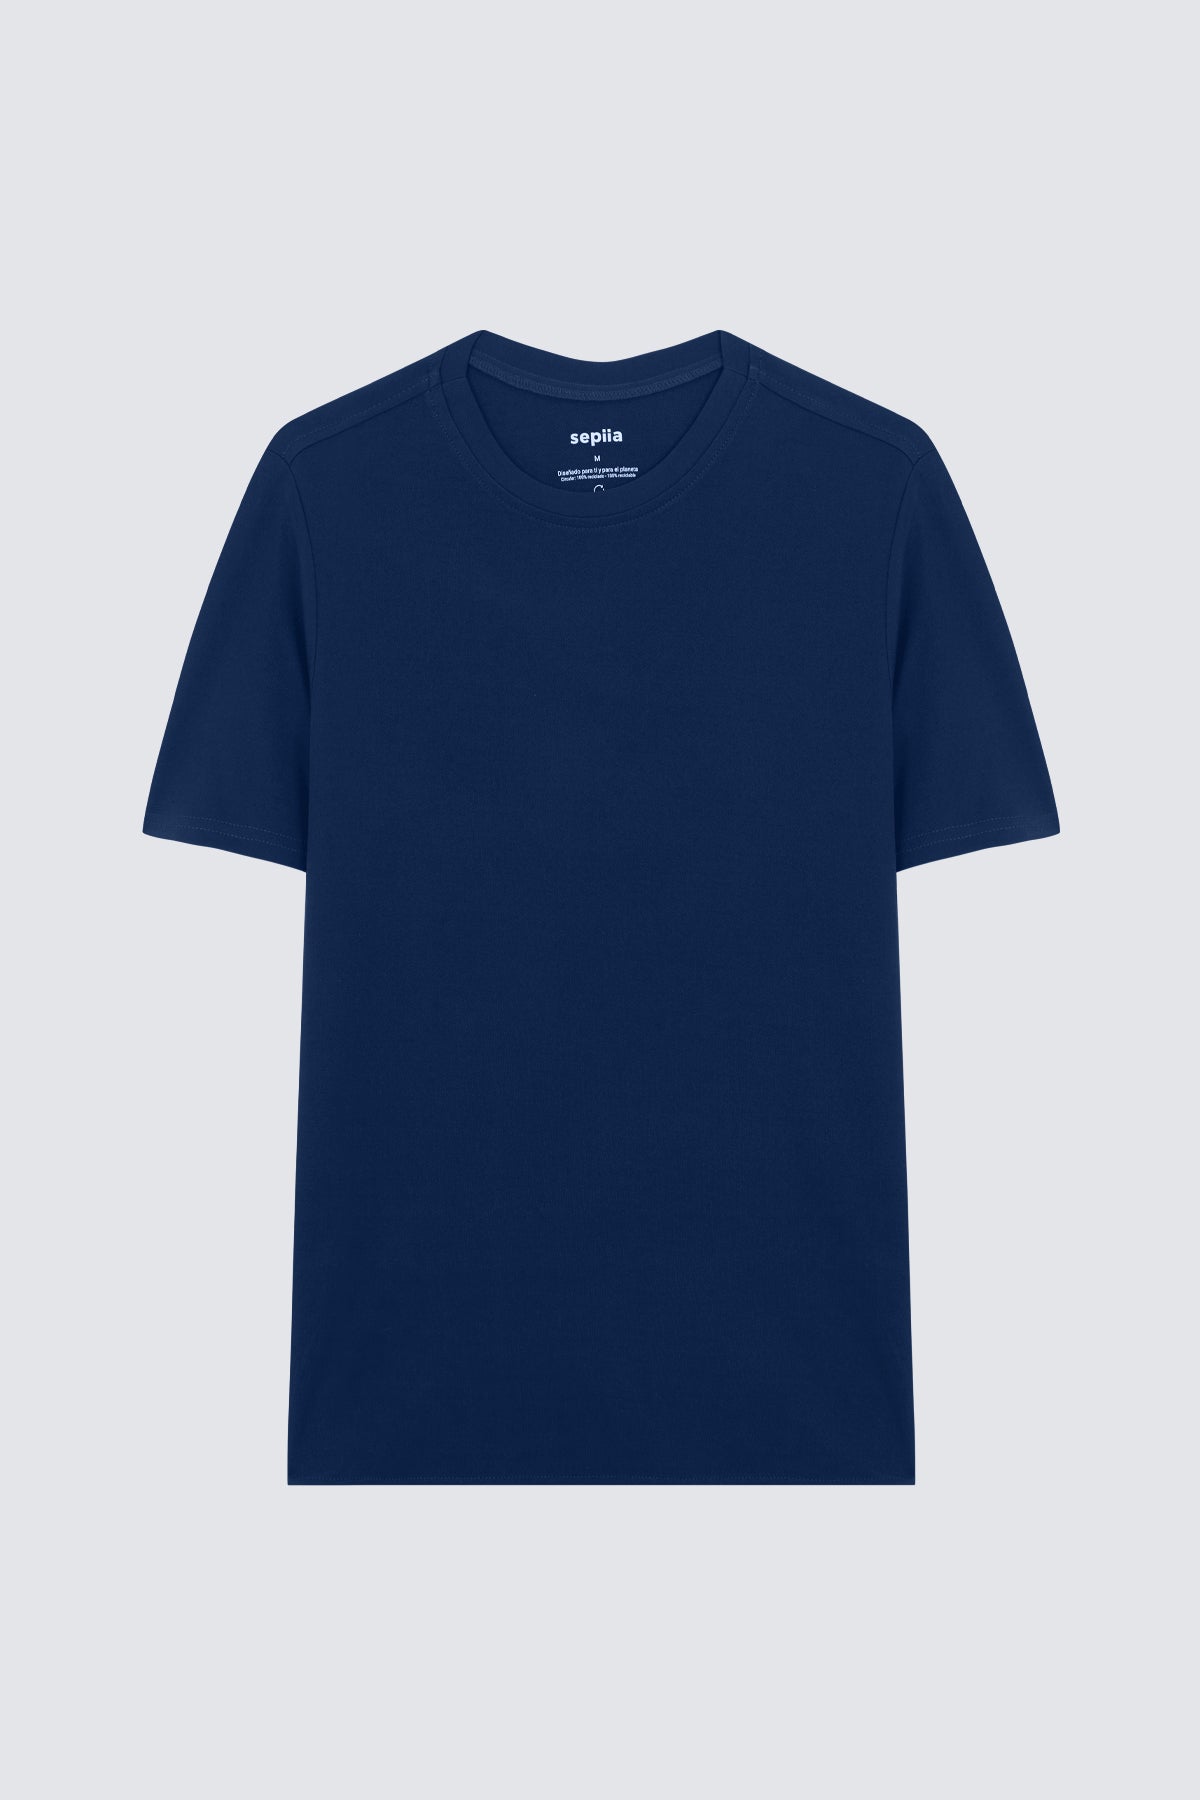 Camiseta de hombre azul zafiro: Camiseta de hombre azul zafiro de manga corta, antiarrugas y antimanchas. Foto espalda